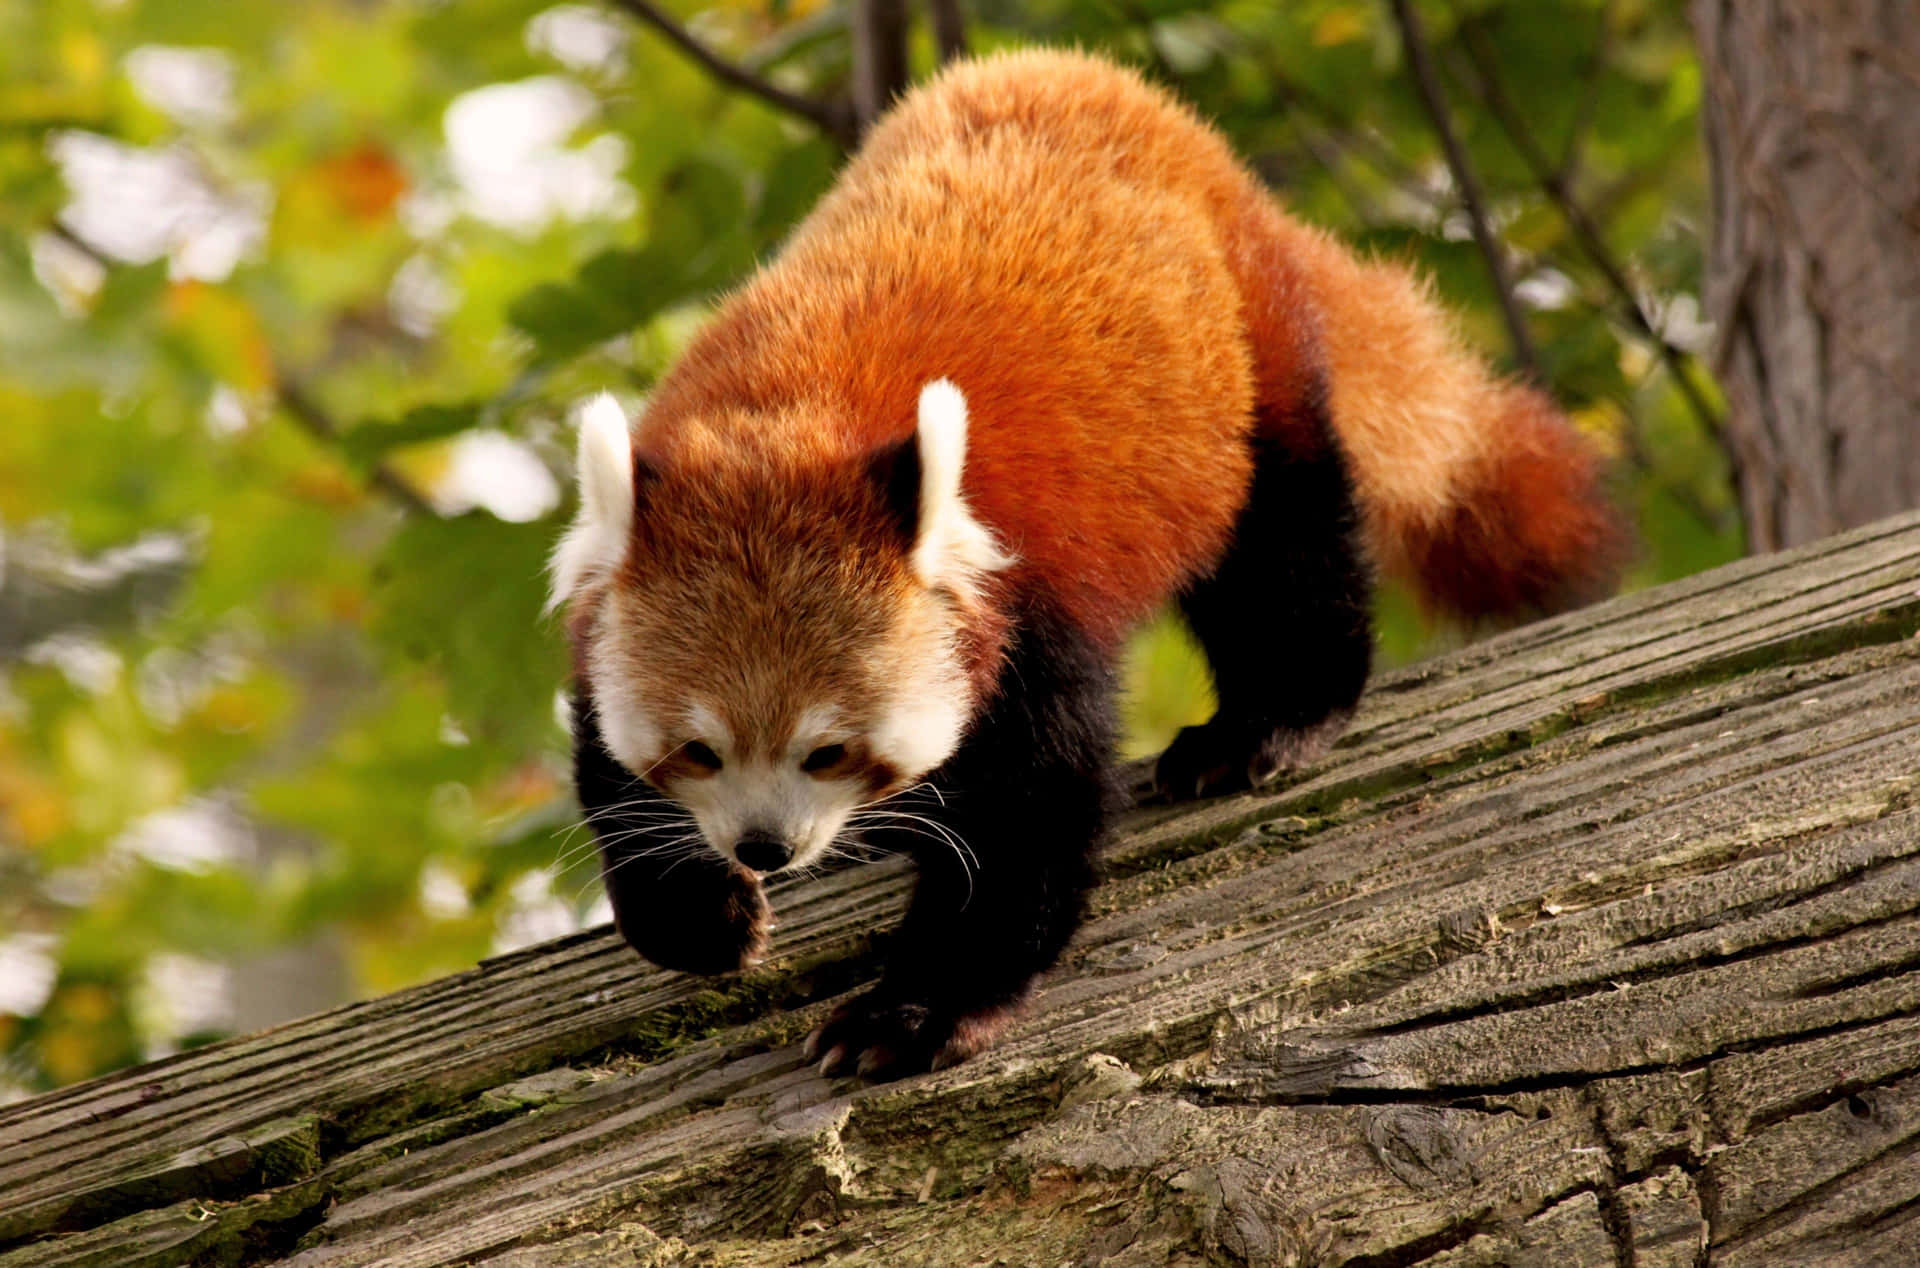 "Look how cute this Red Panda is!" Wallpaper